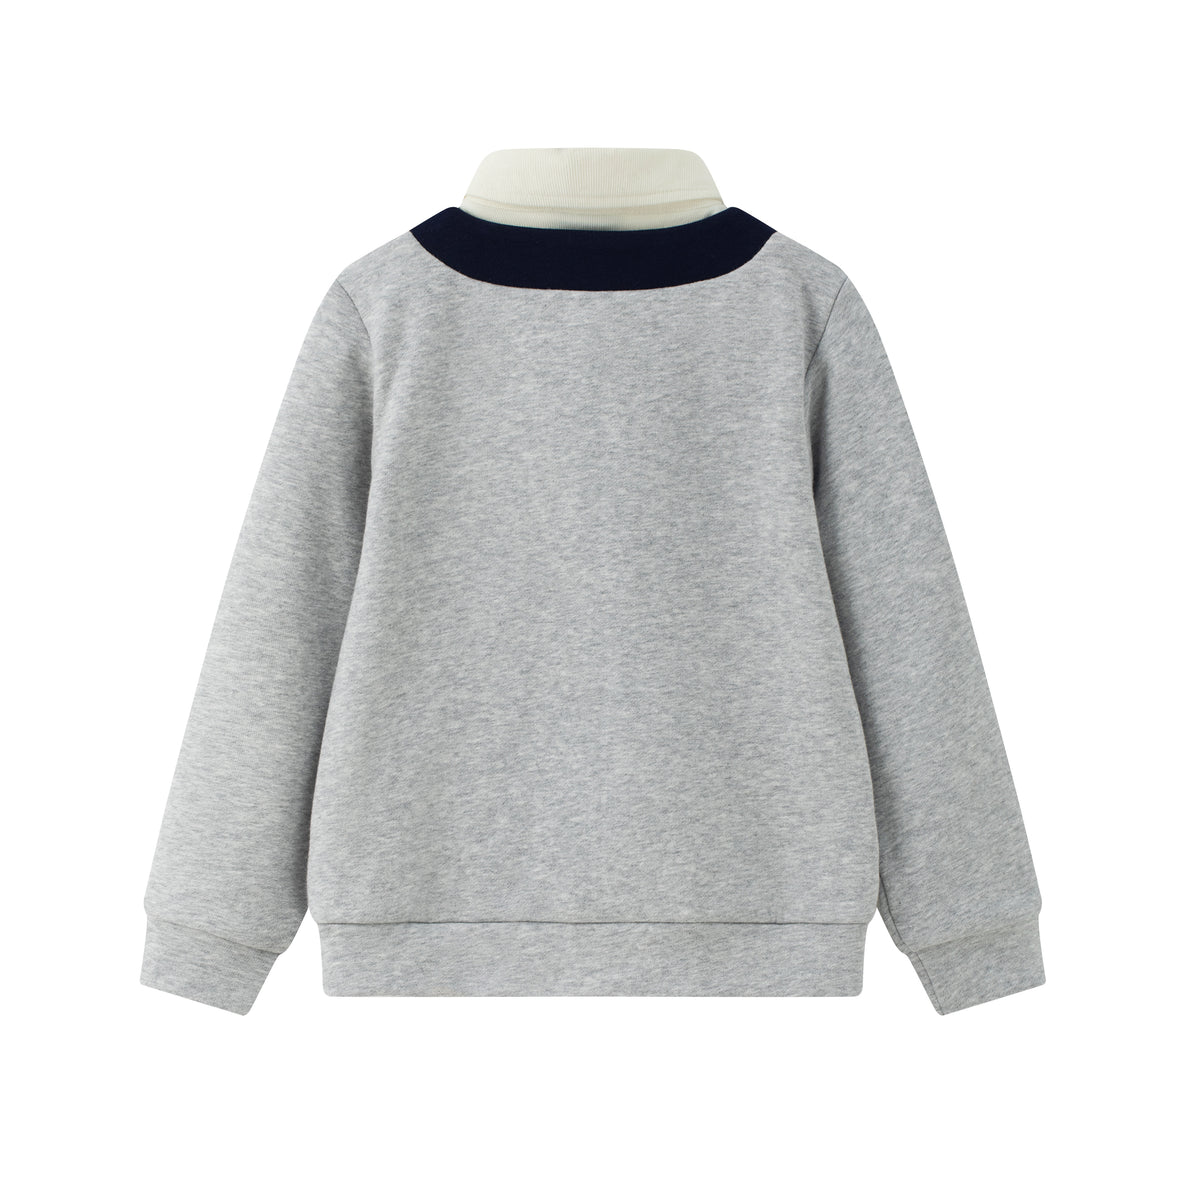 Vauva x Le Petit Prince - Boys Long Sleeve Sweatshirt product image back